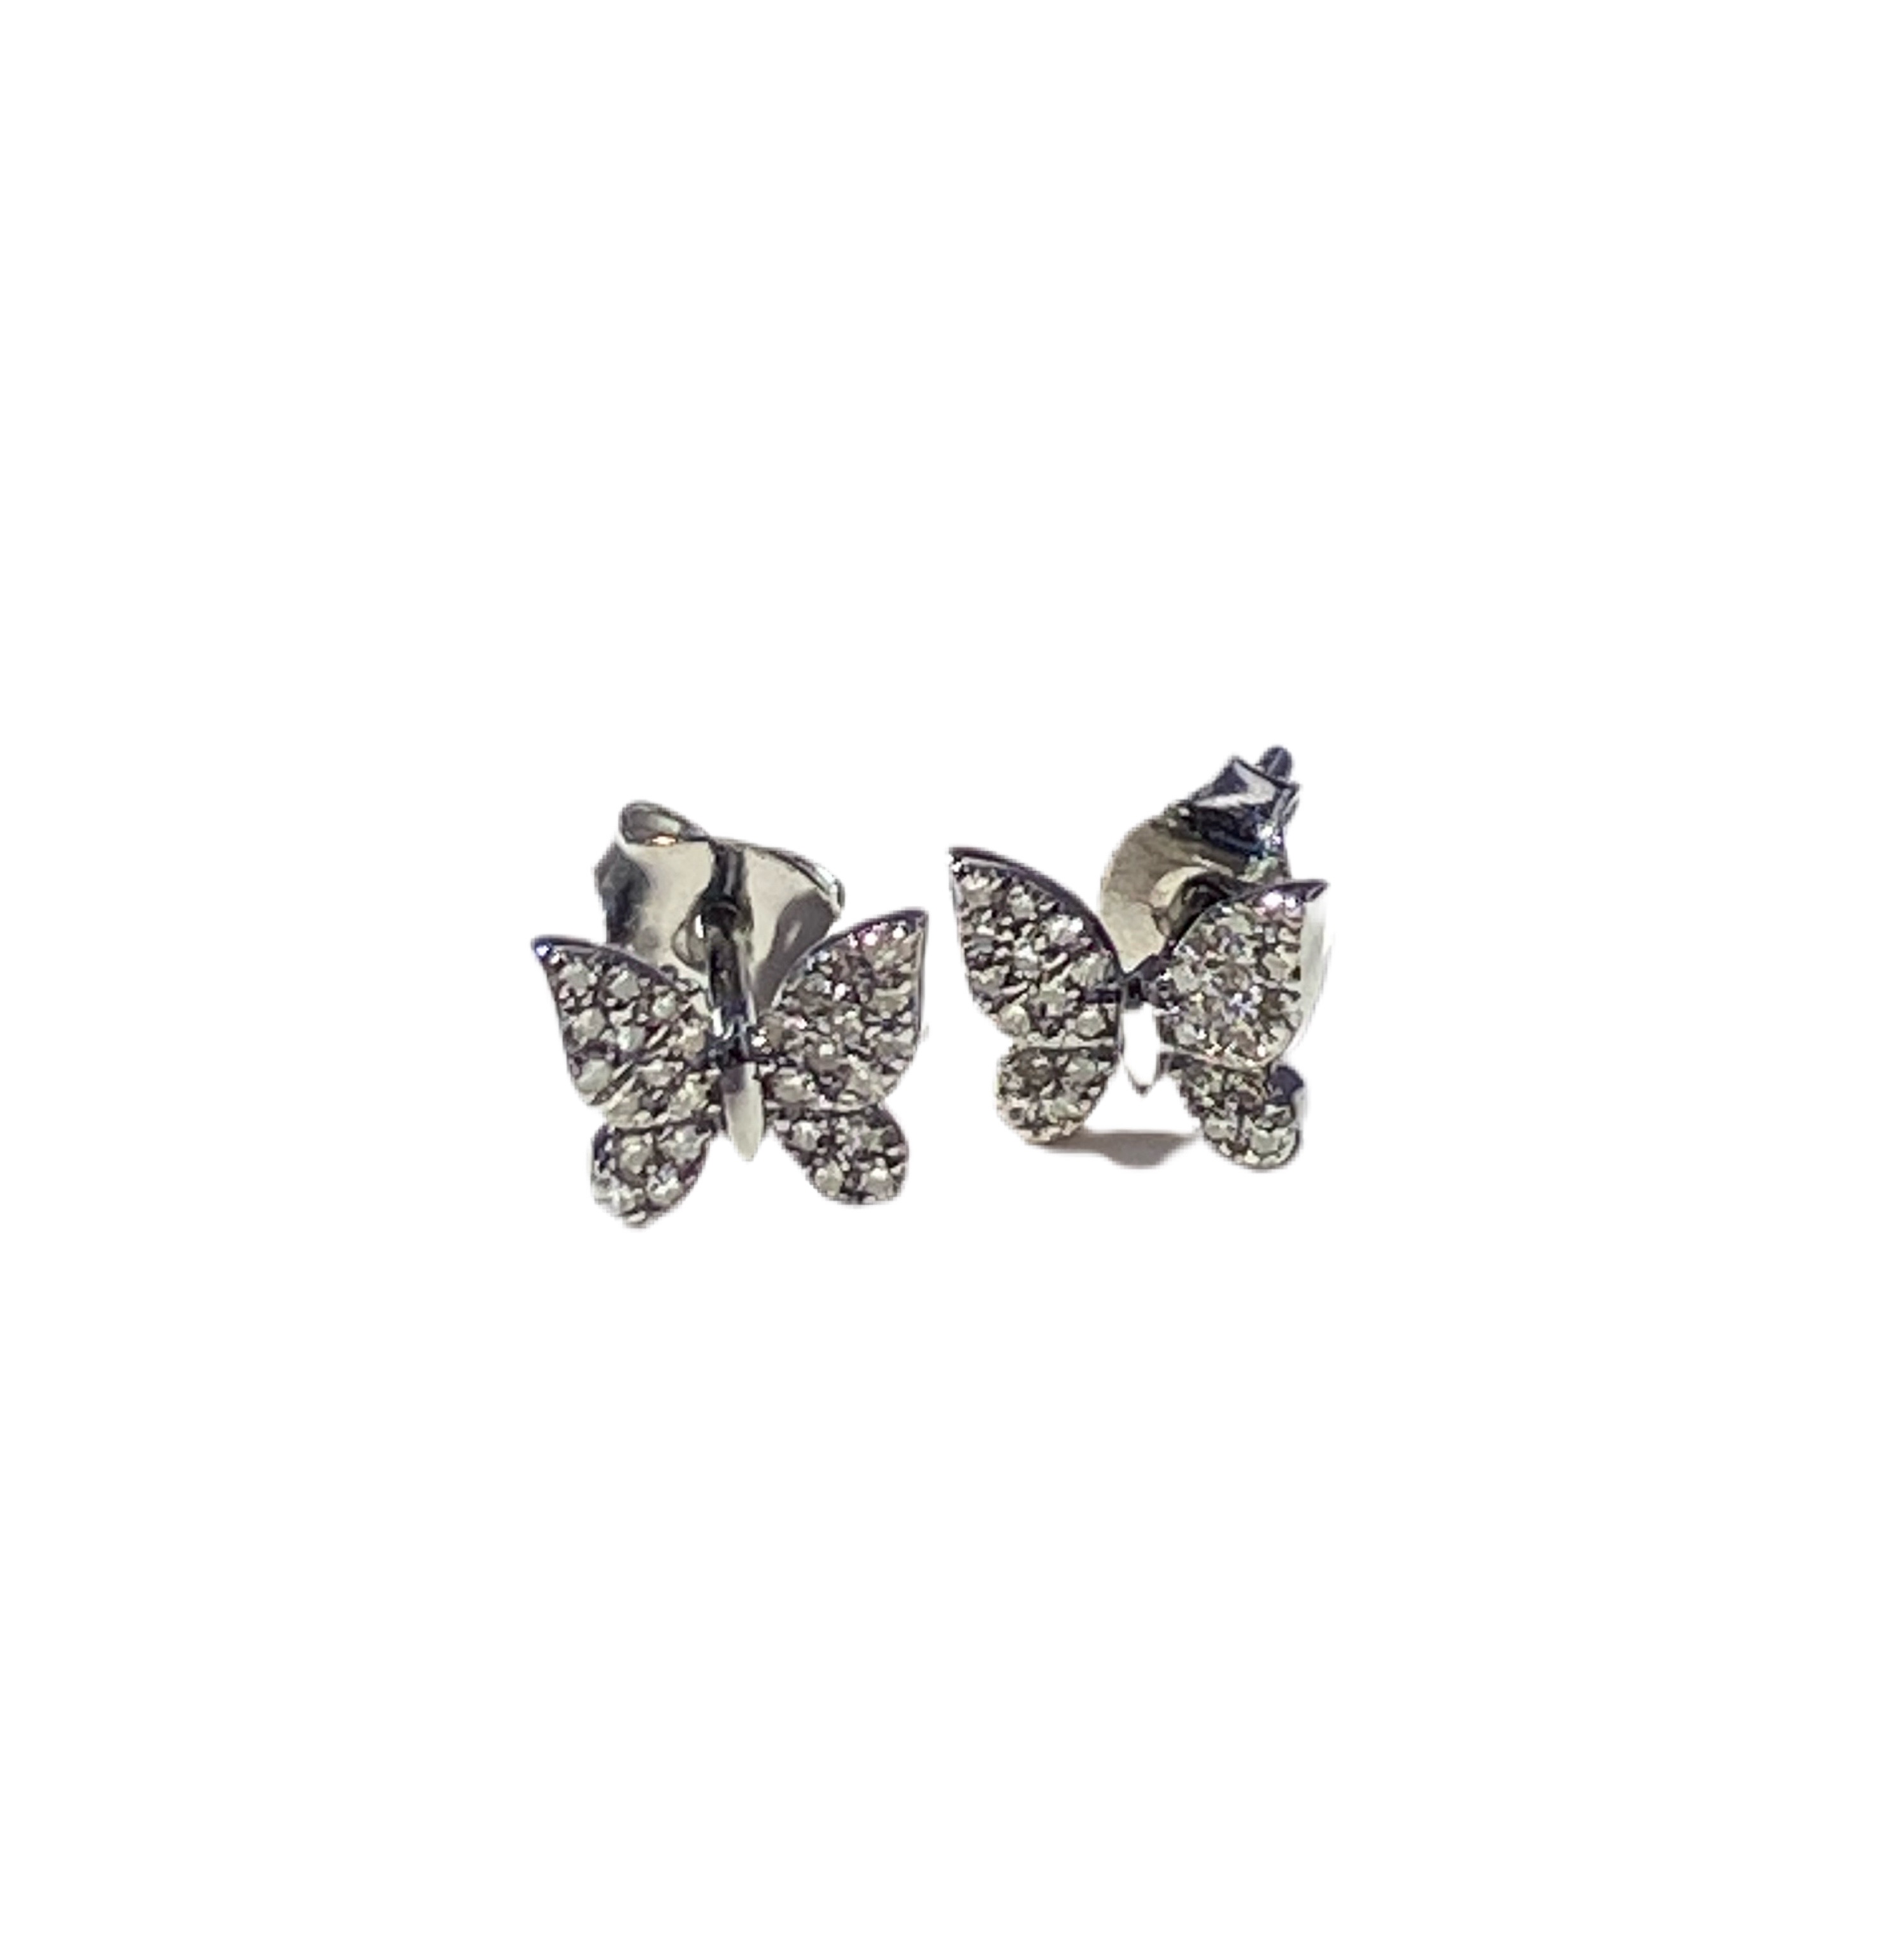 S.Row Designs Small Butterfly Earrings